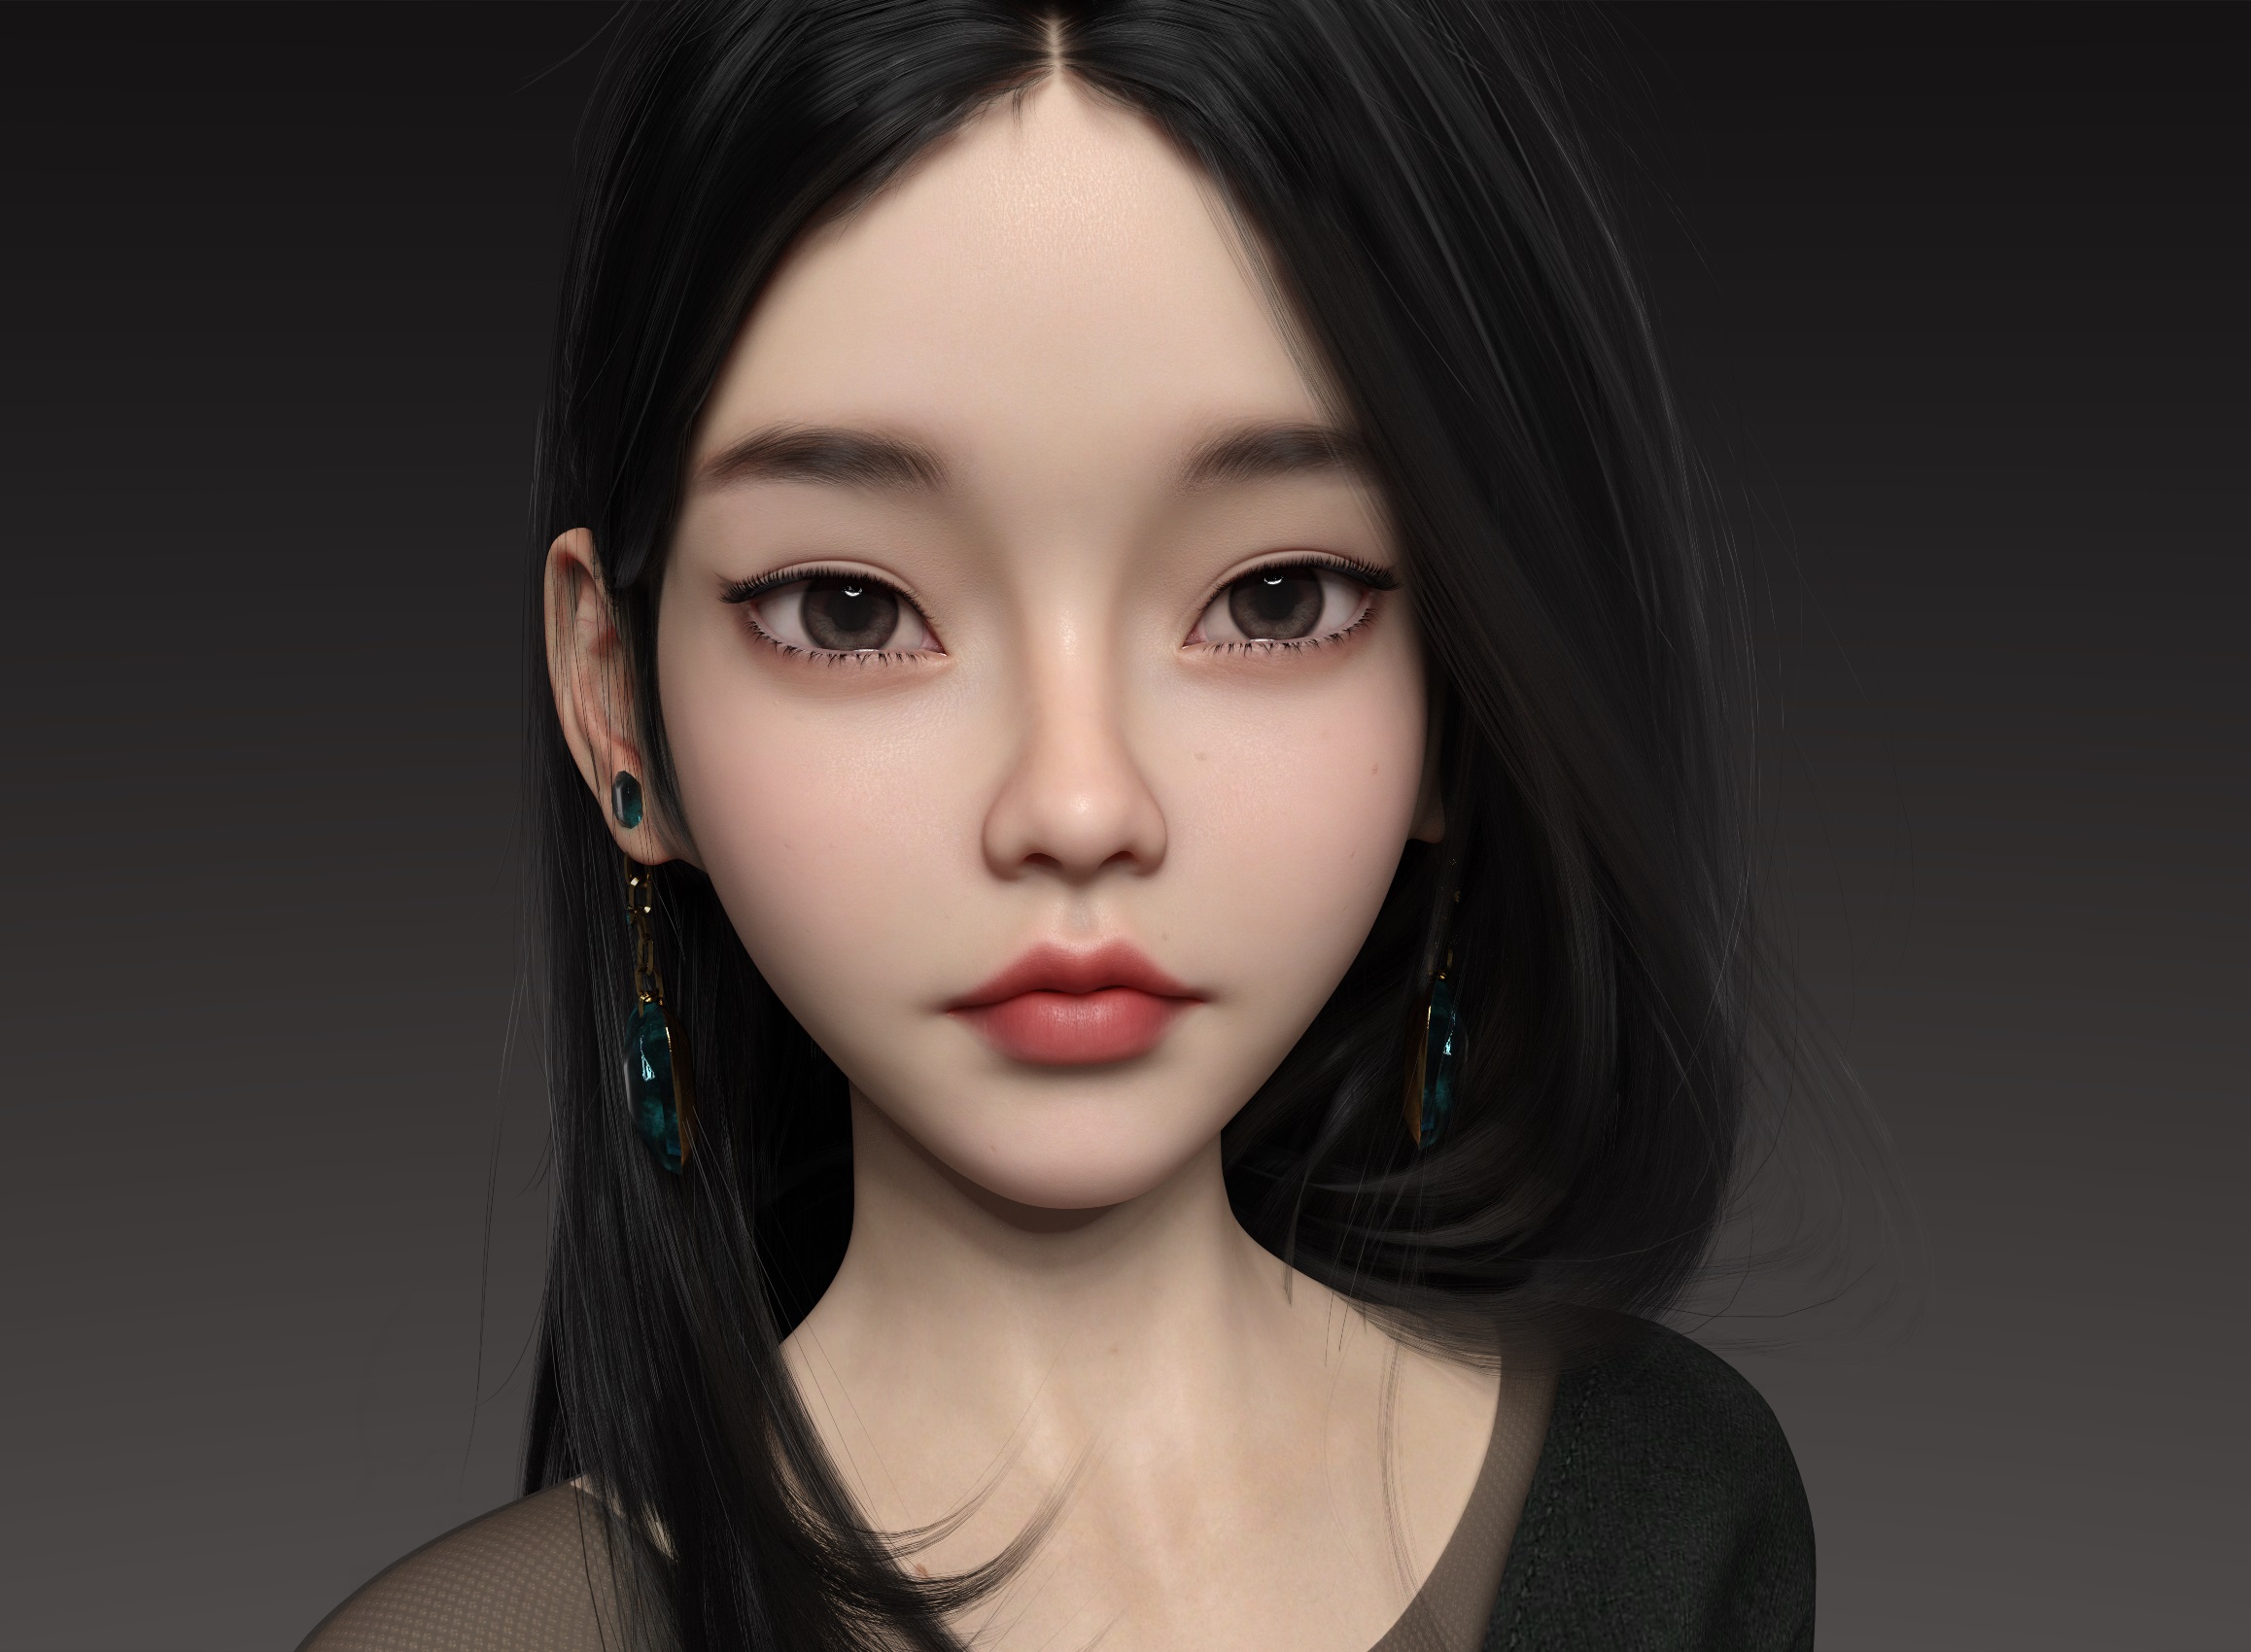 Korean Beauty by SirTancrede on DeviantArt